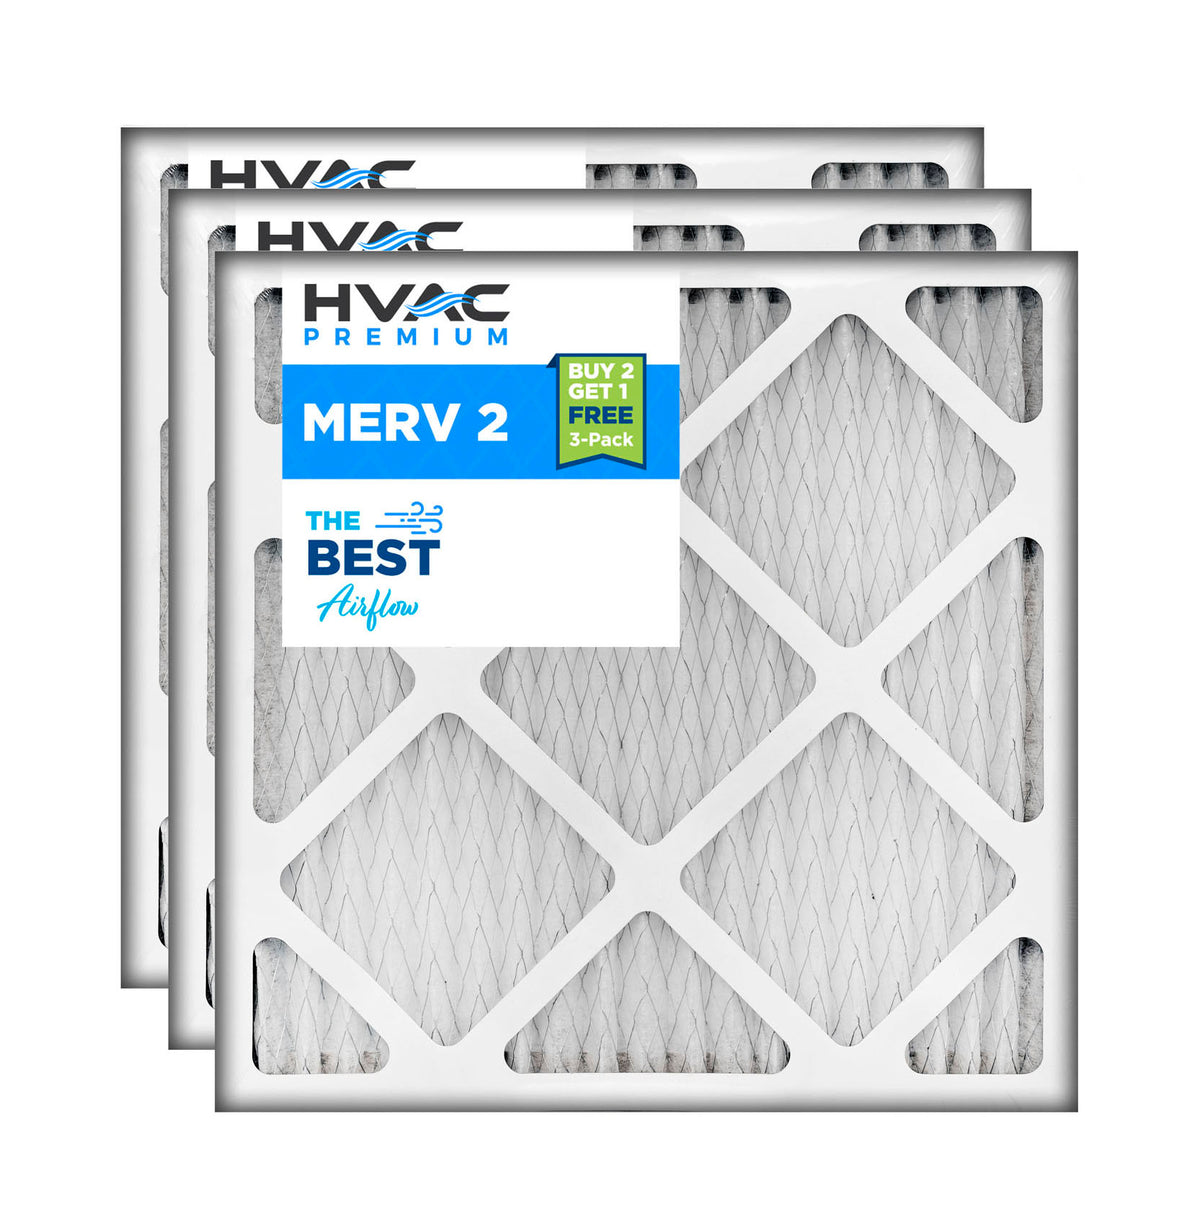 16 x 25 Merv 2 HVAC Pleated Filter, 3-Pack